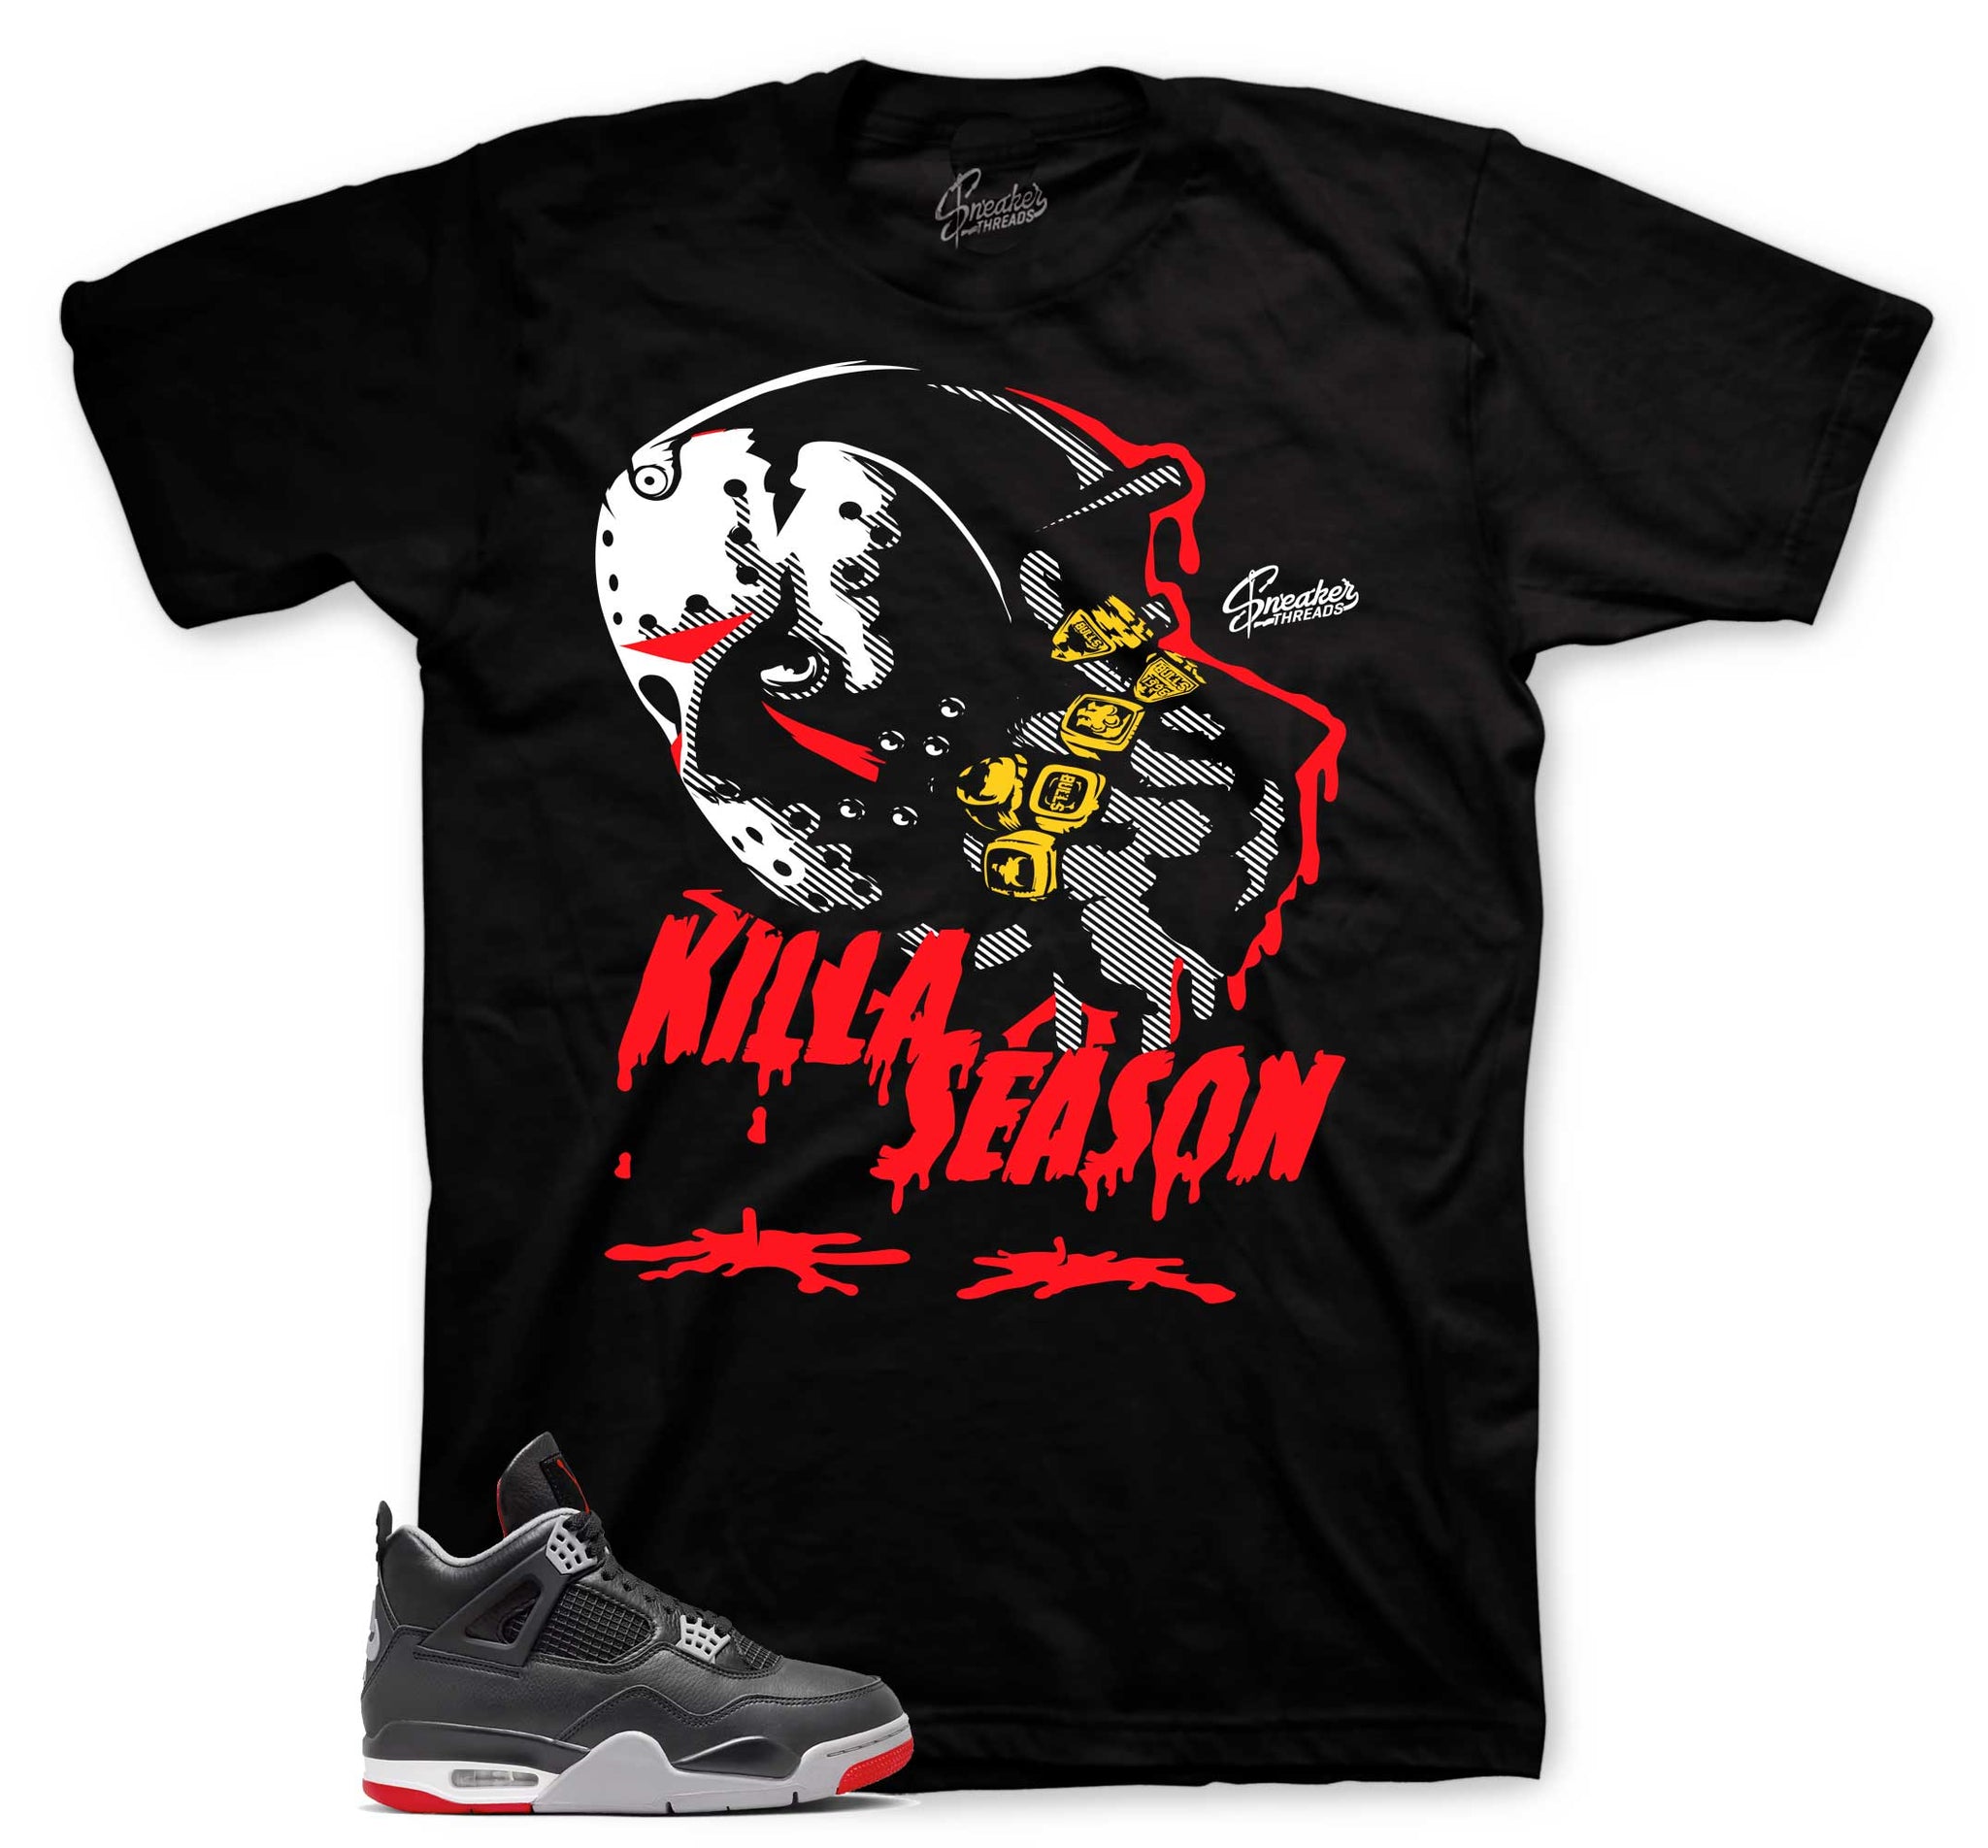 Retro 4 Bred Shirt - Killa Season - Black